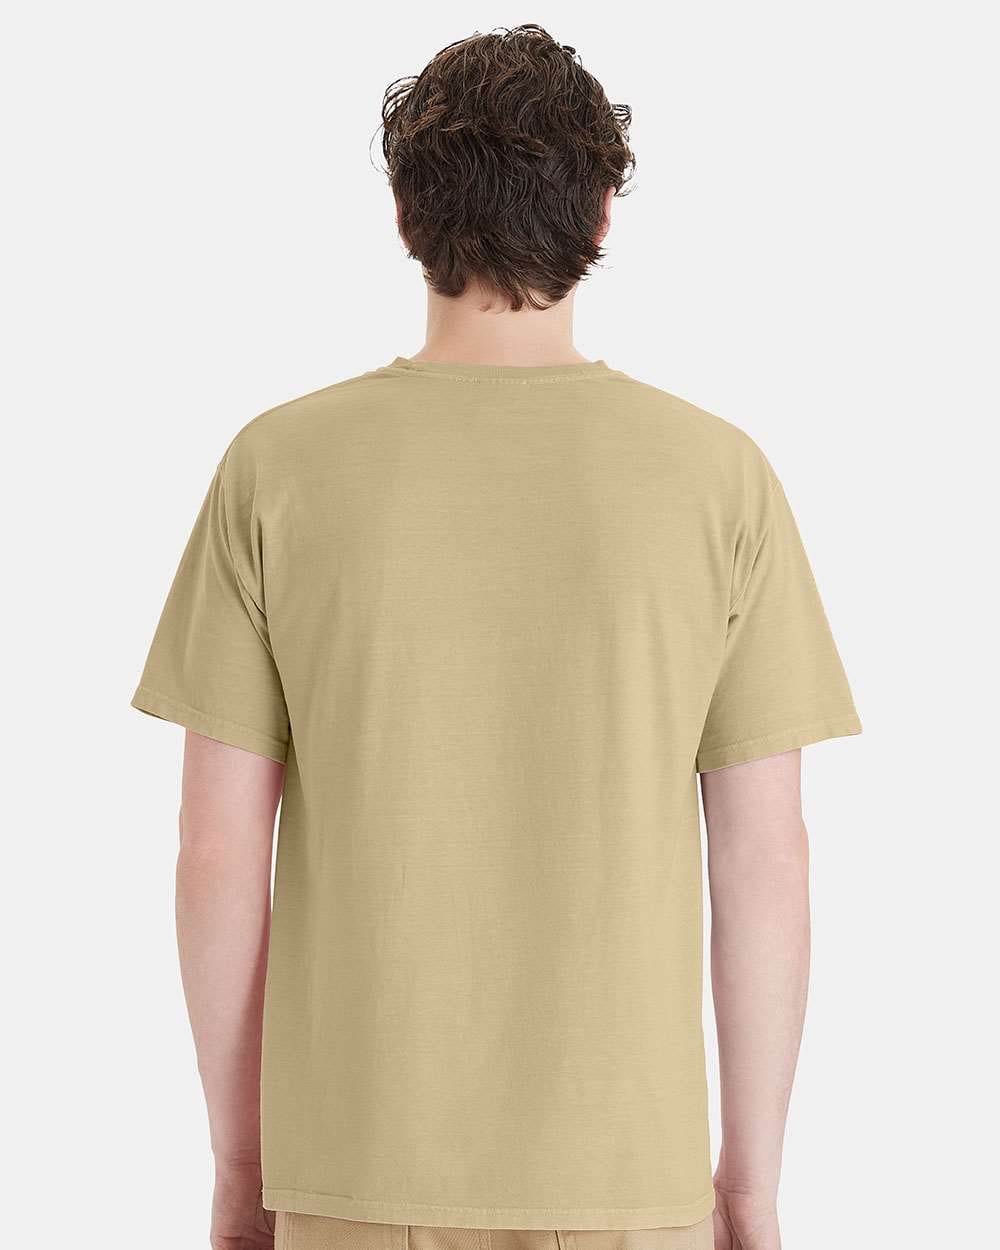 Crewneck T-shirts Eco-friendly Gdh11b - Activewear / Crewneck / T-shirts